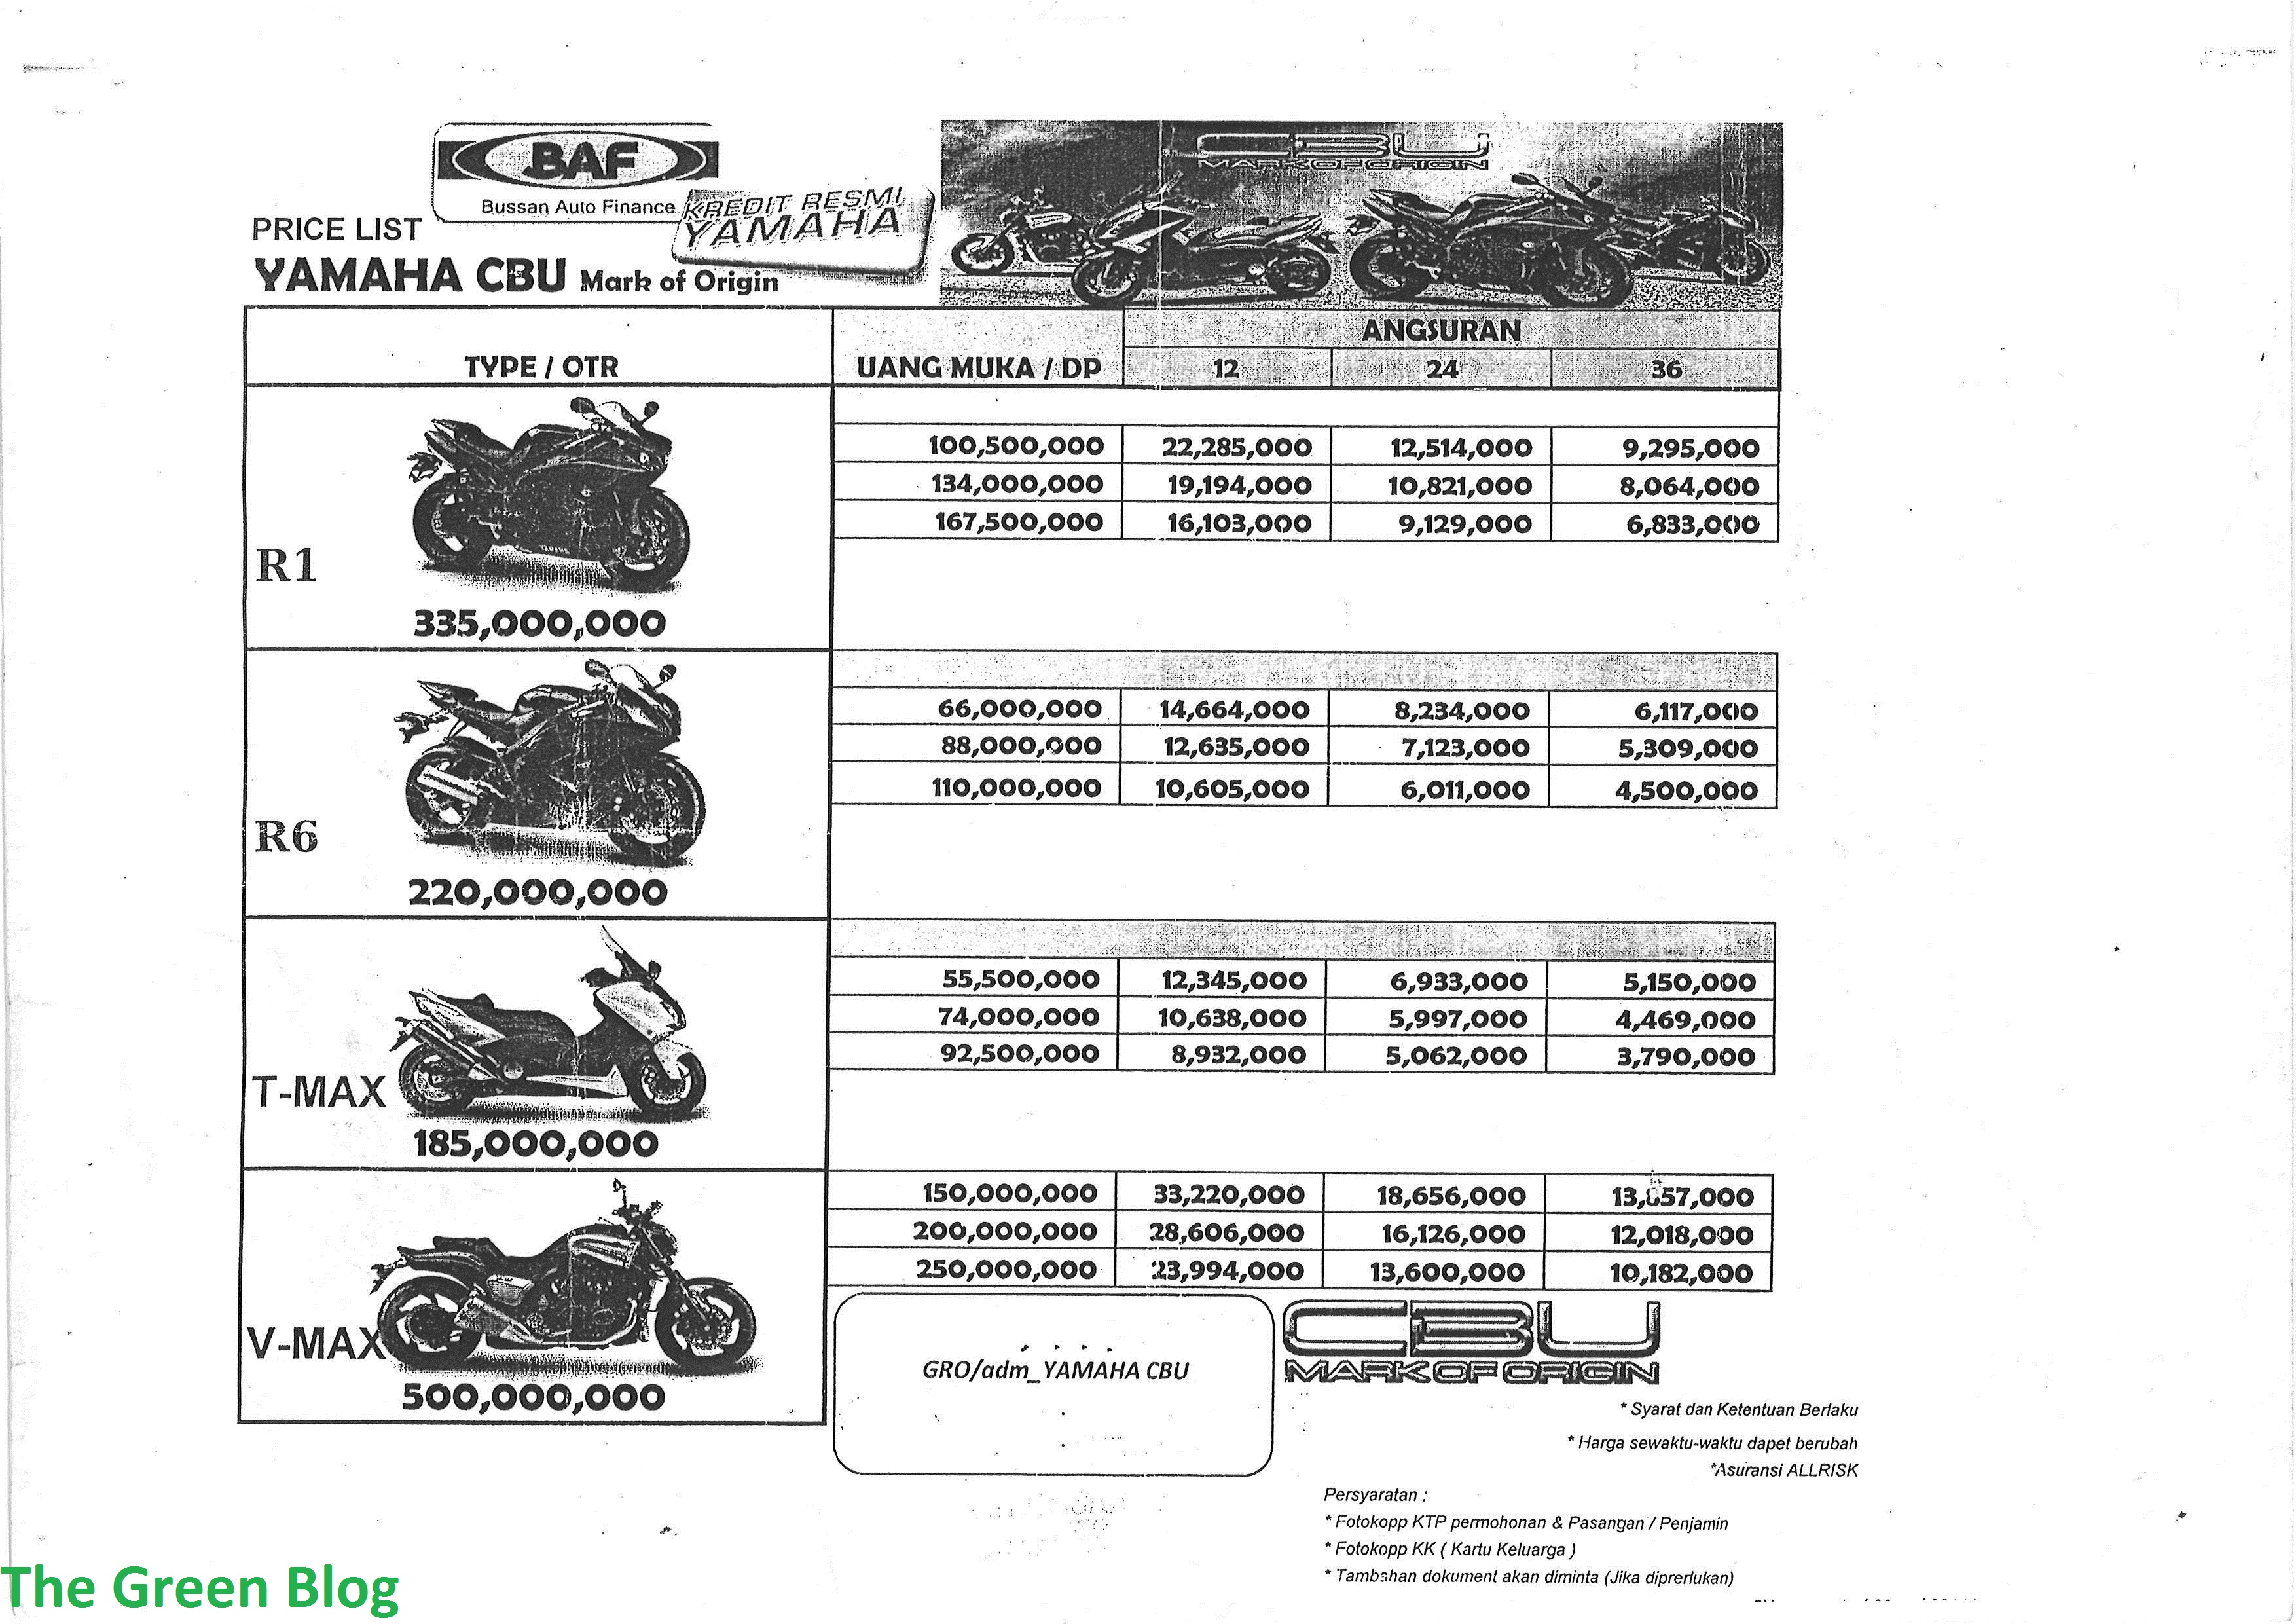 Daftar Harga Motor Yamaha CBU Di Jakarta Fair Kemayoran 2014 The